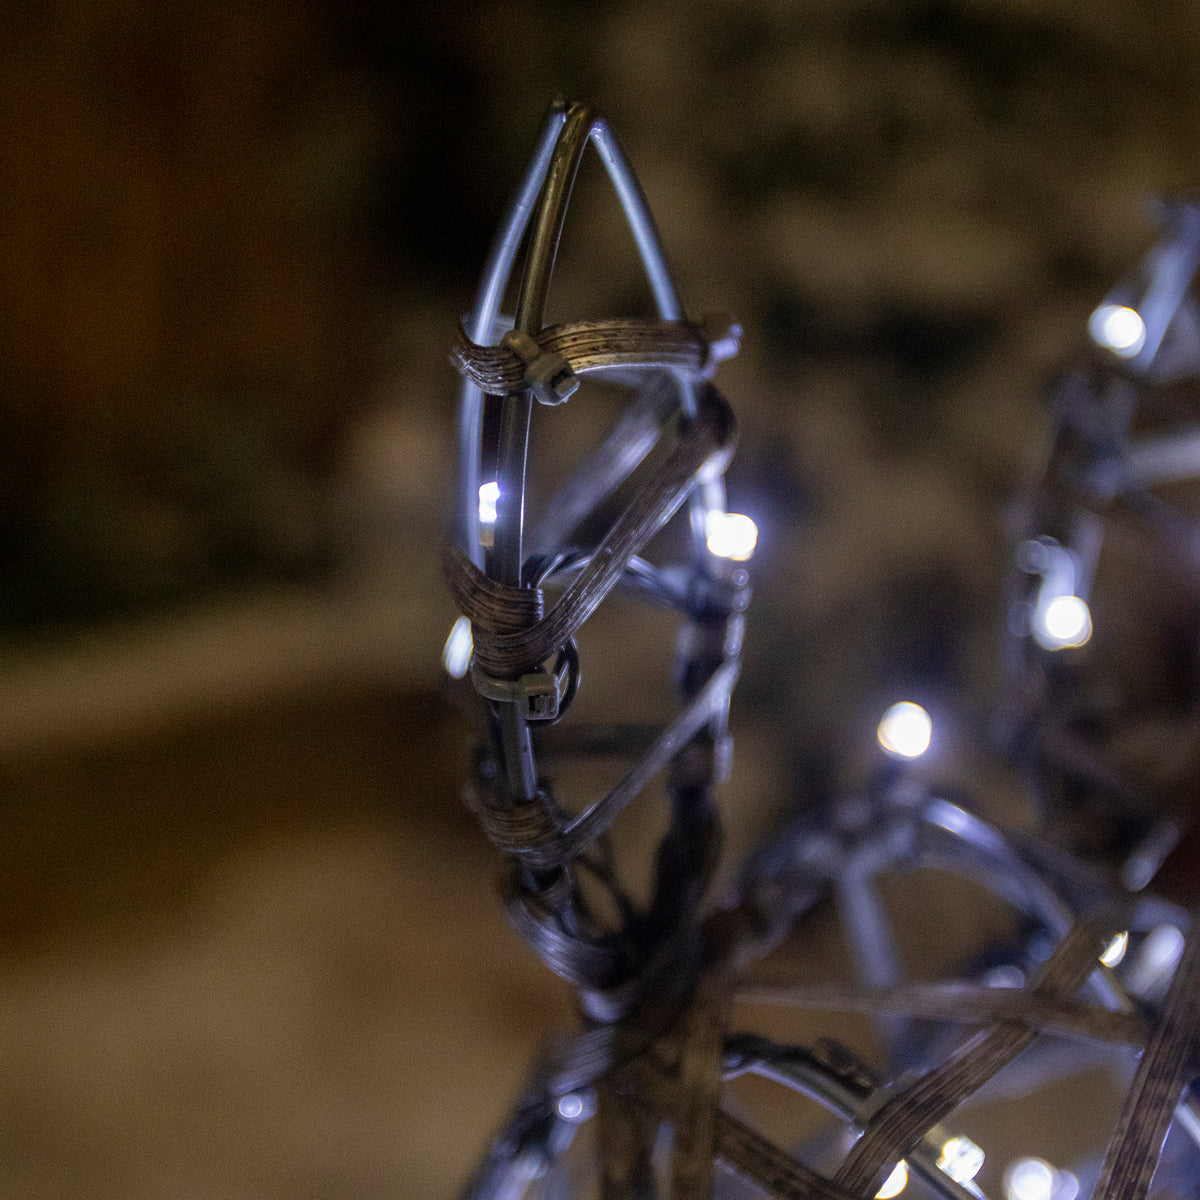 Pre-Lit Christmas Reindeer - 98CM Grey Weave Light Up Doe with 230 White LEDs